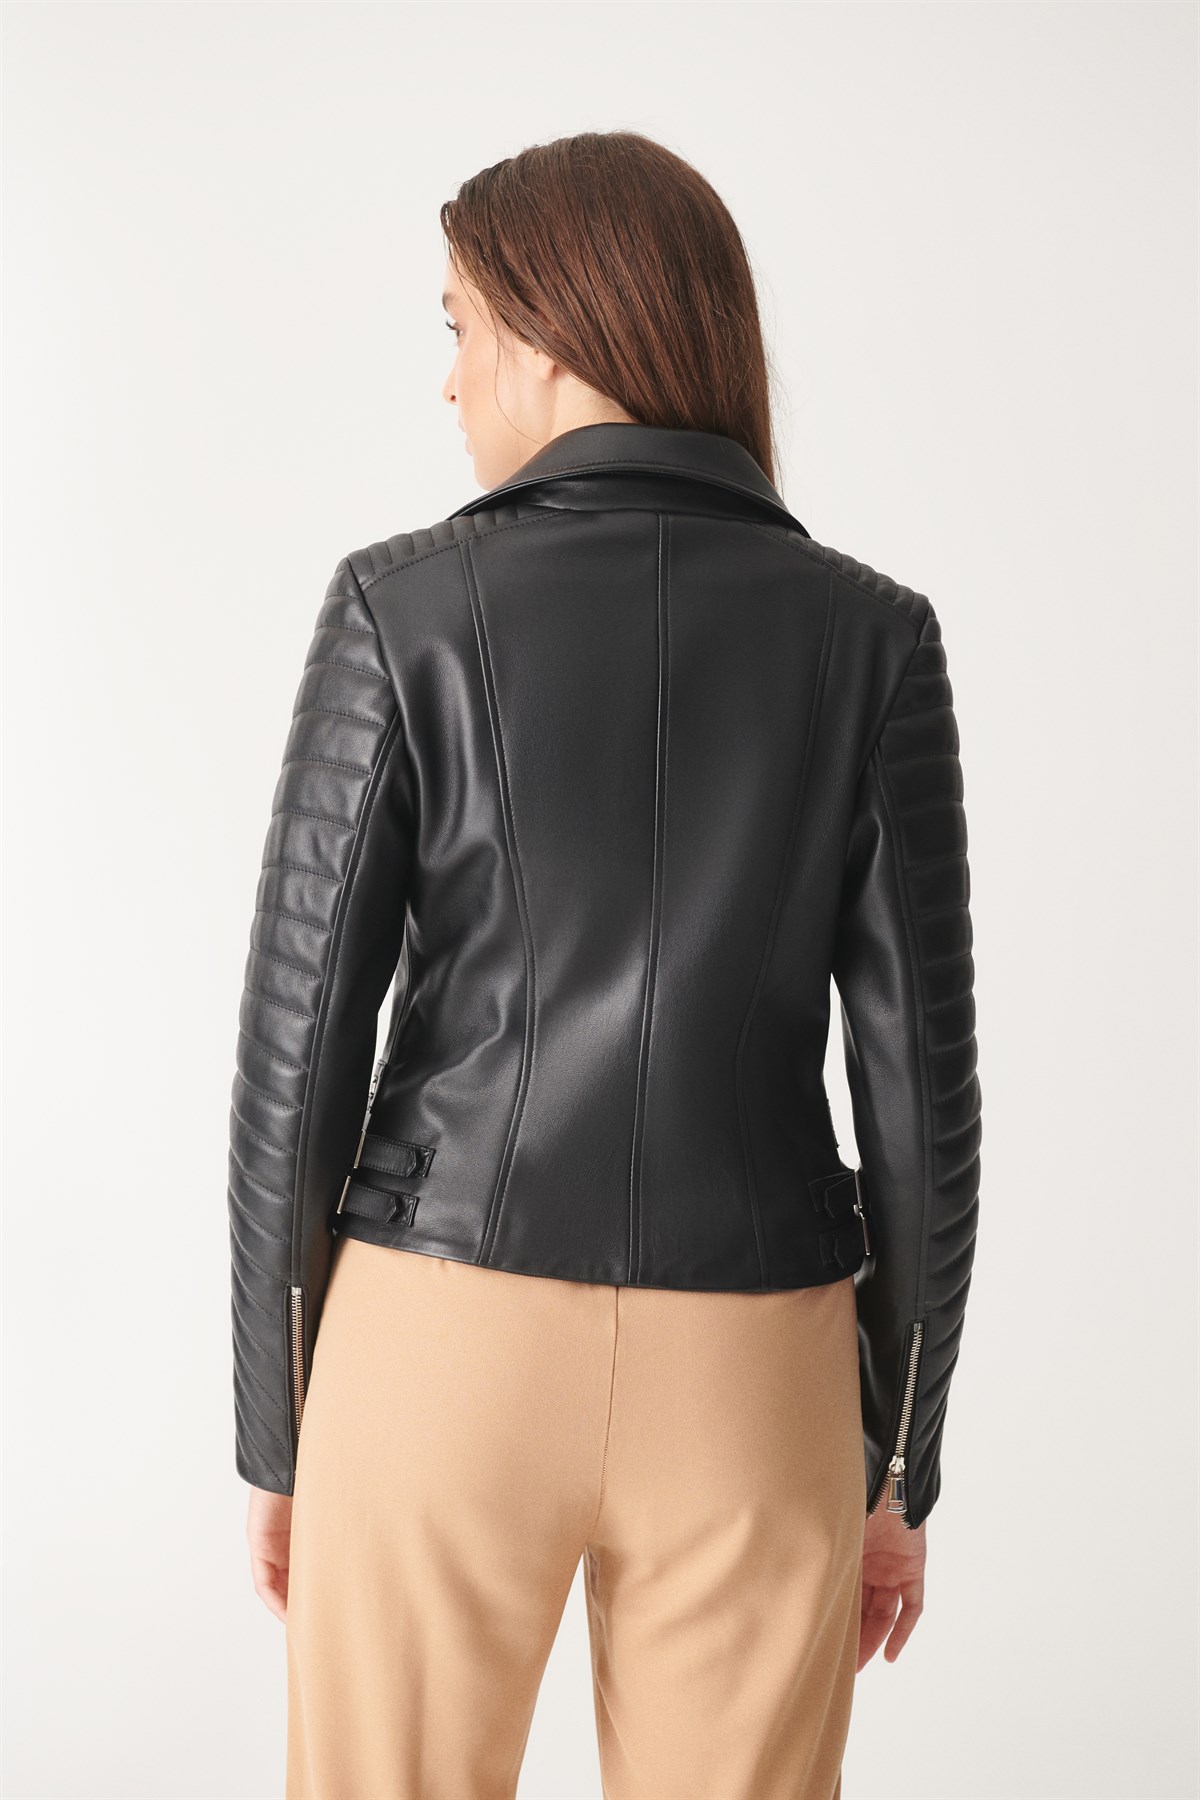 WOMEN FASHION Jackets Biker jacket Casual Massimo Dutti biker jacket Black S discount 50% 